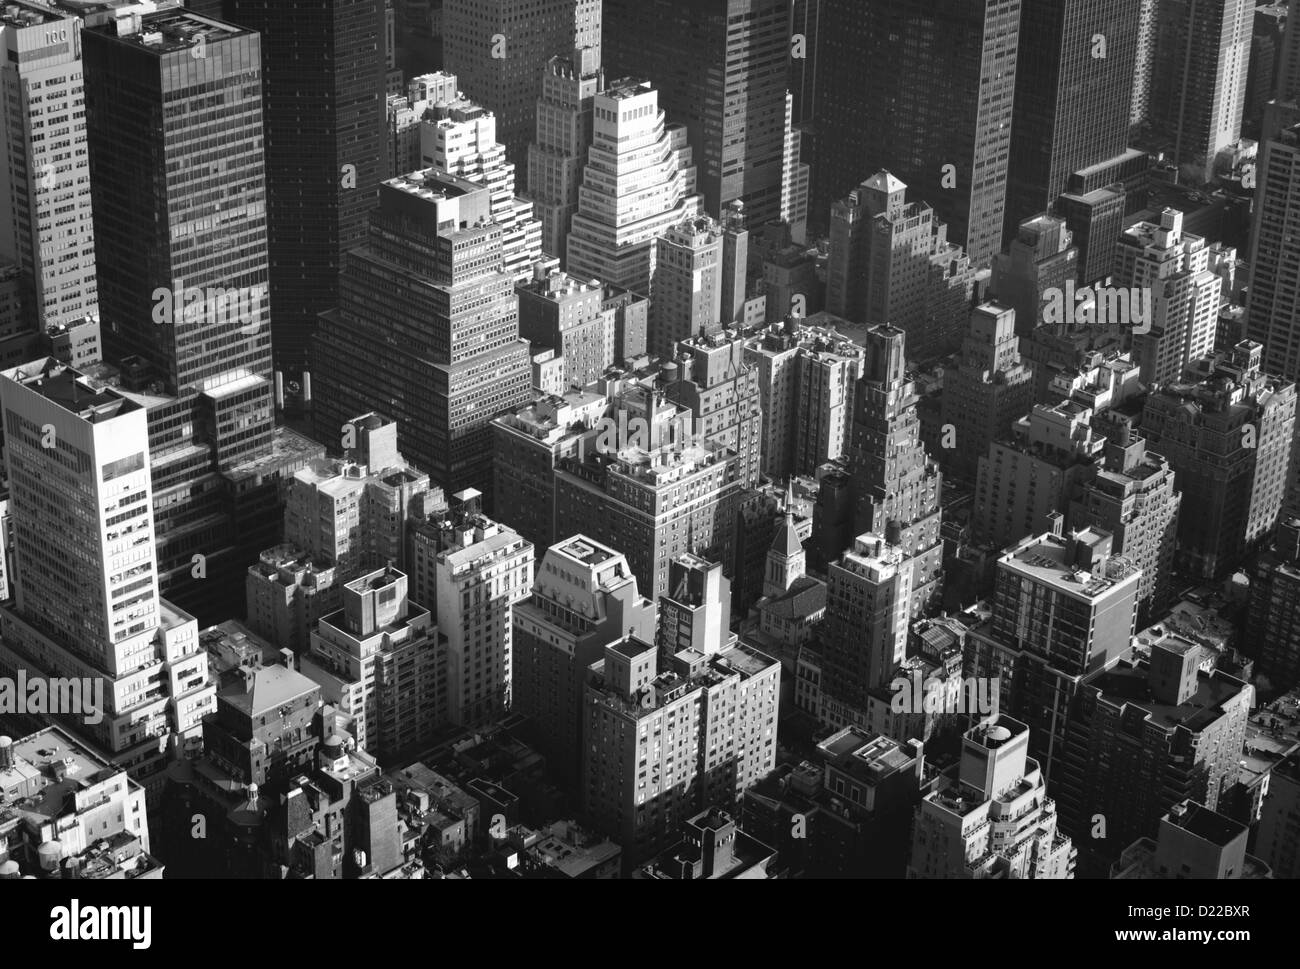 Birdseye Blick über NYC Dächer, Manhattan - Blick vom Empire State Building. Stockfoto